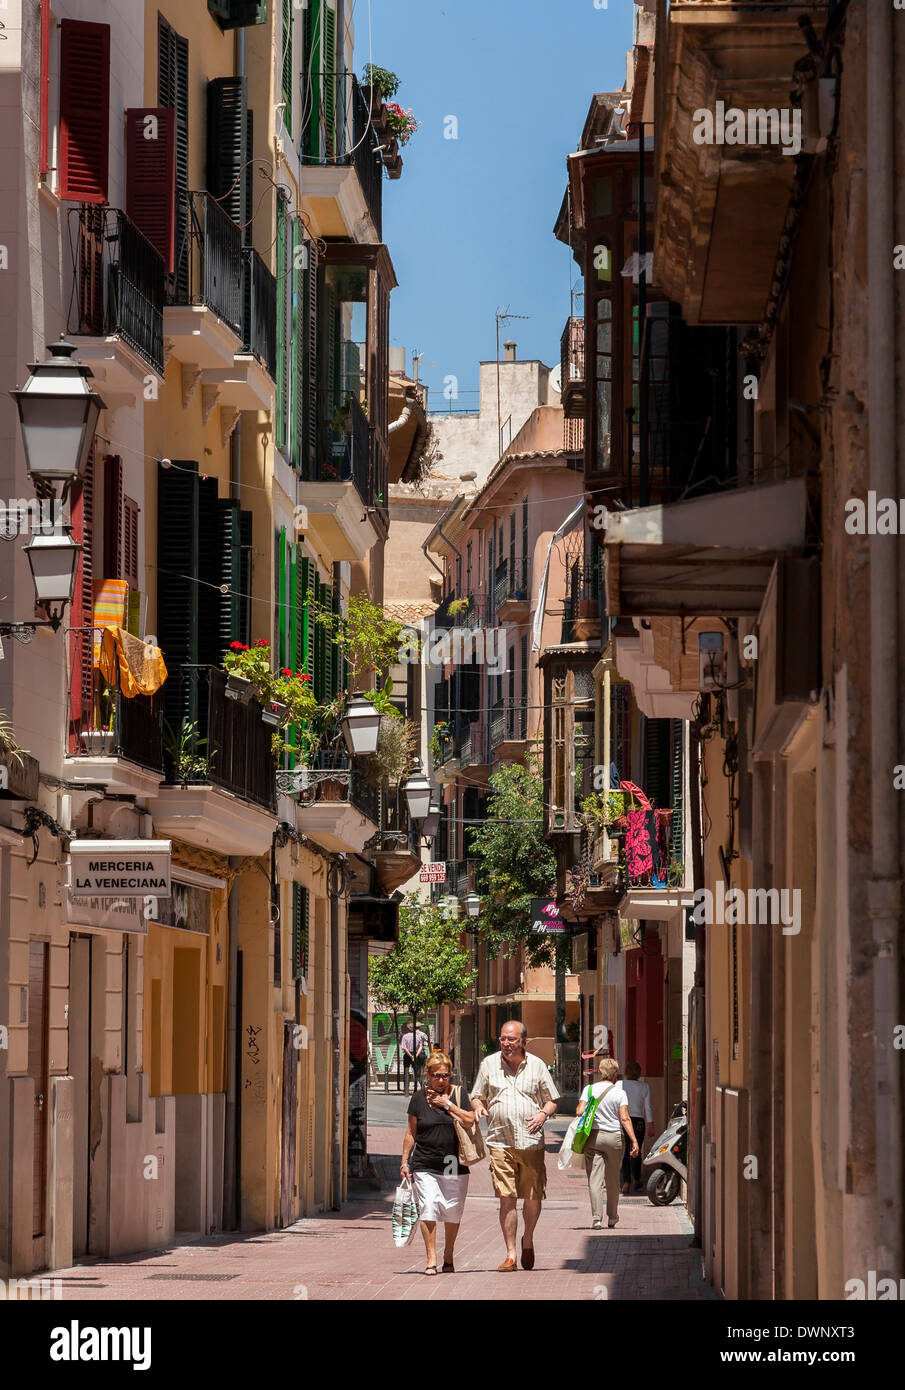 Typical alleyway in the historic centre of Palma de Mallorca, Majorca, Balearic Islands, Spain Stock Photo